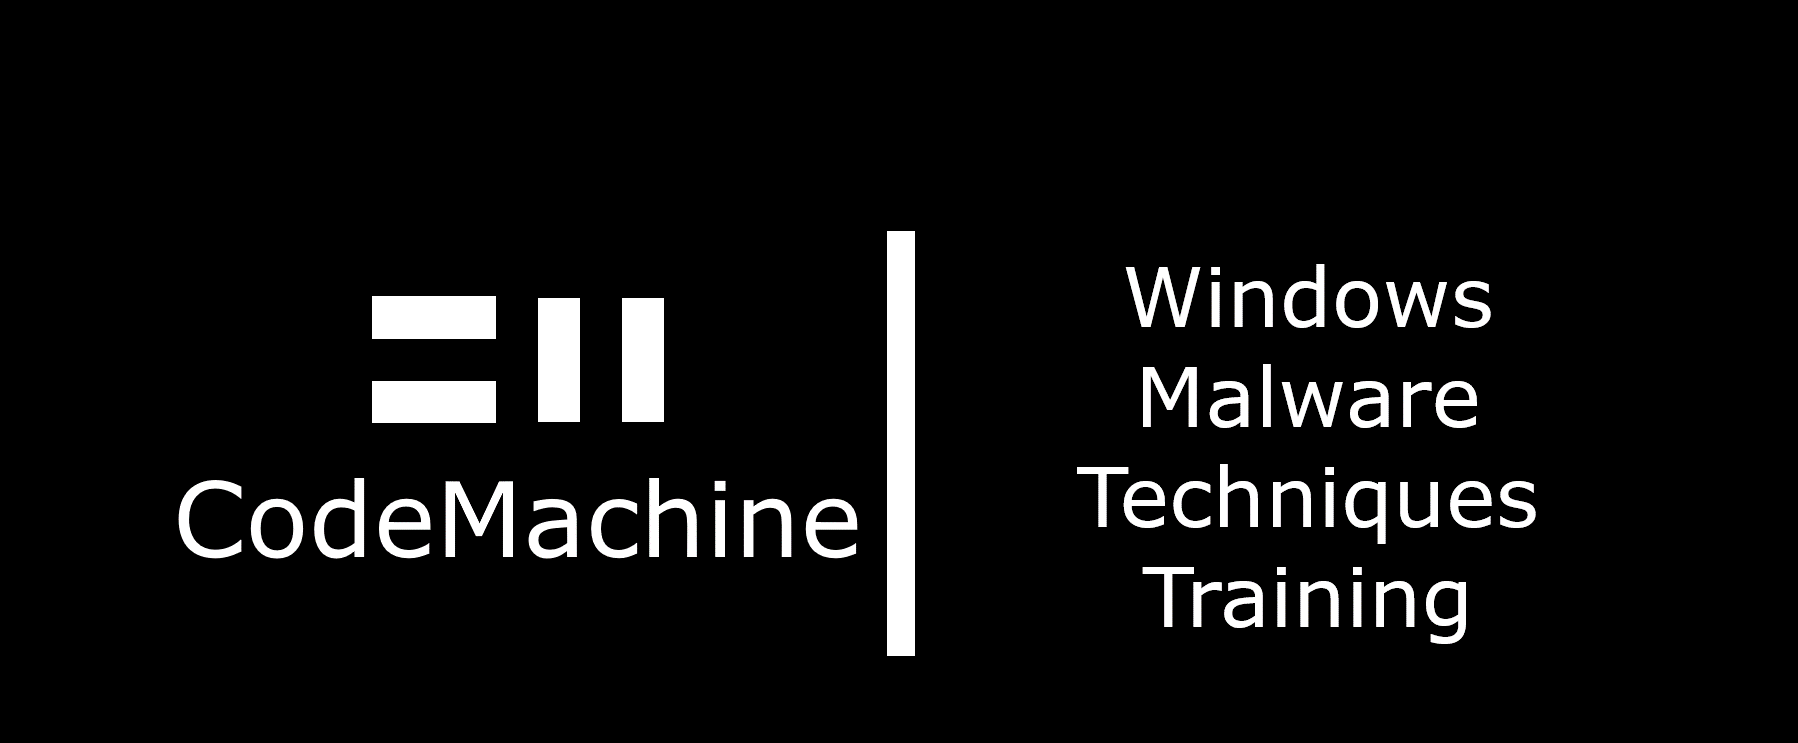 Windows Malware Techniques Training